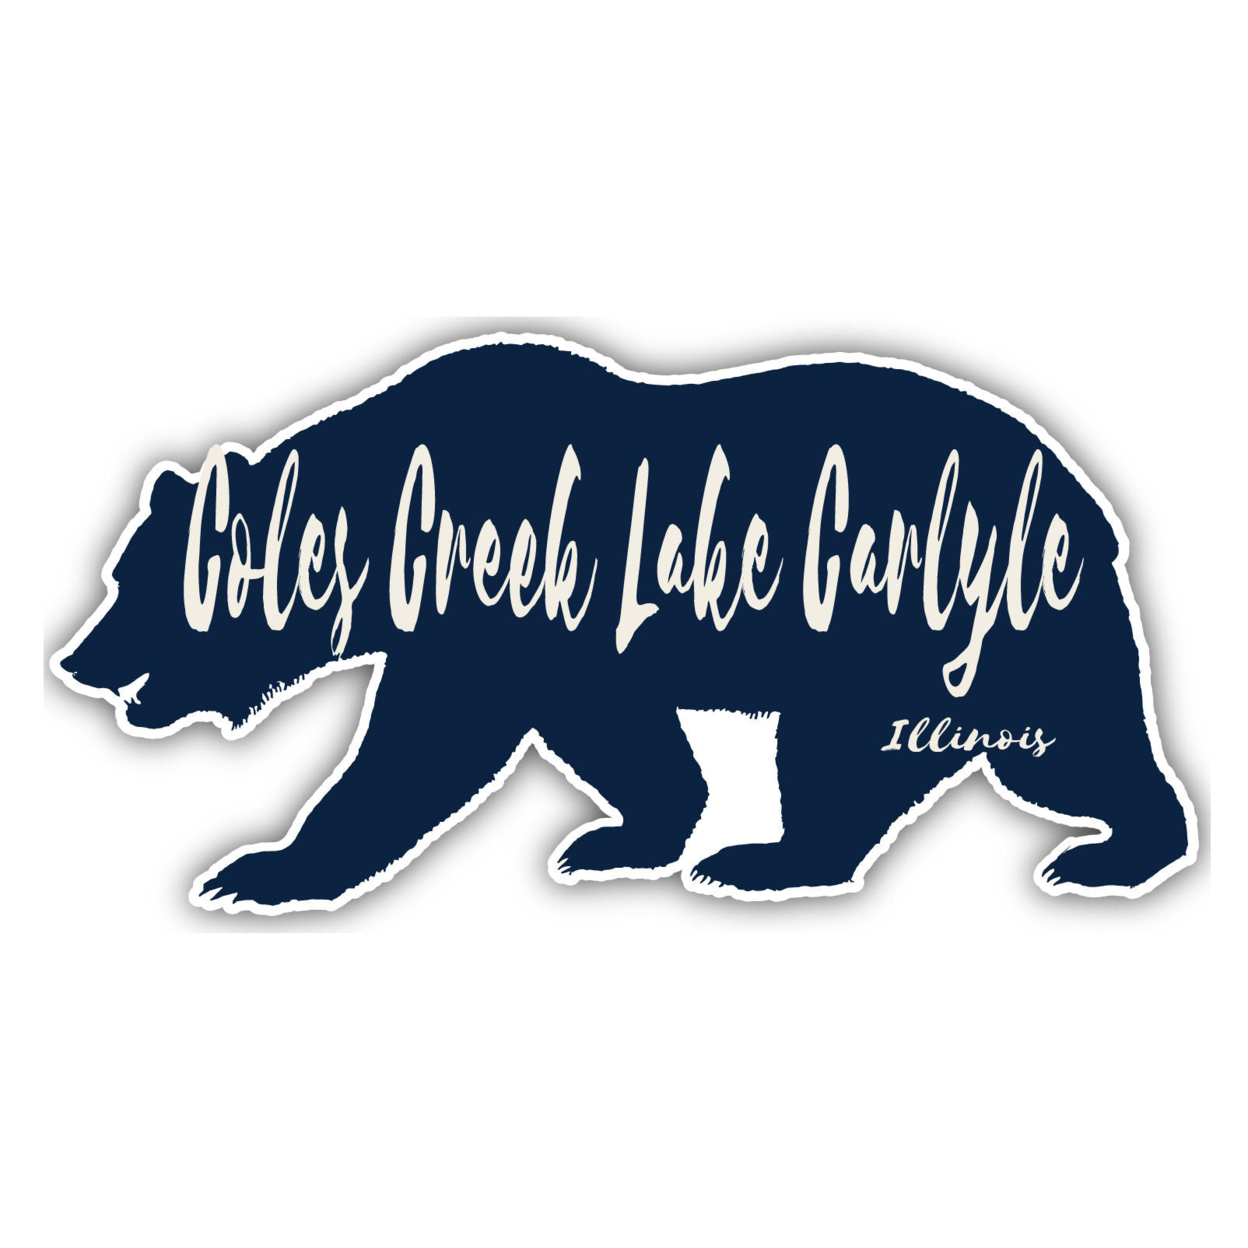 Coles Creek Lake Carlyle Illinois Souvenir Decorative Stickers (Choose Theme And Size) - Single Unit, 6-Inch, Bear